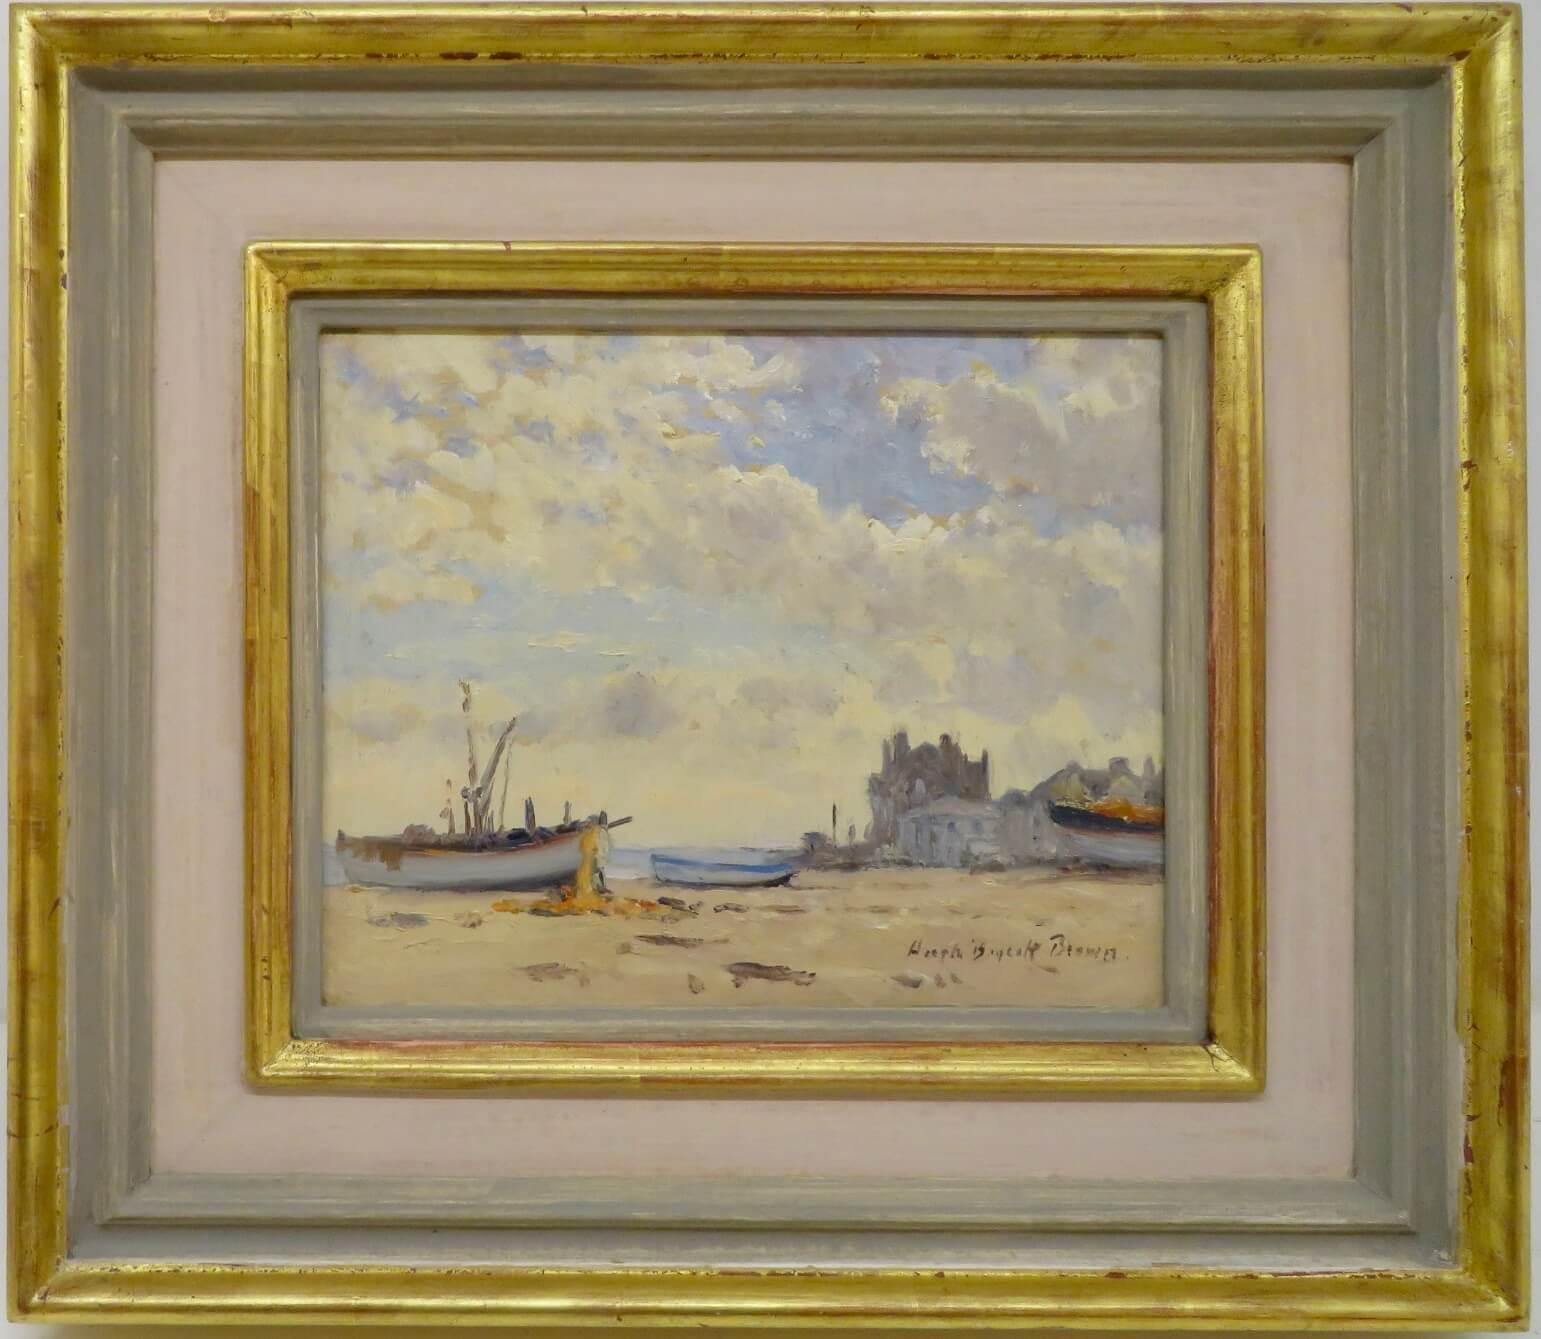 HUGH BOYCOTT BROWN  Landscape Painting - Original post impressionist ENGLISH MARINE oil painting ALDEBURGH BEACH SUFFOLK